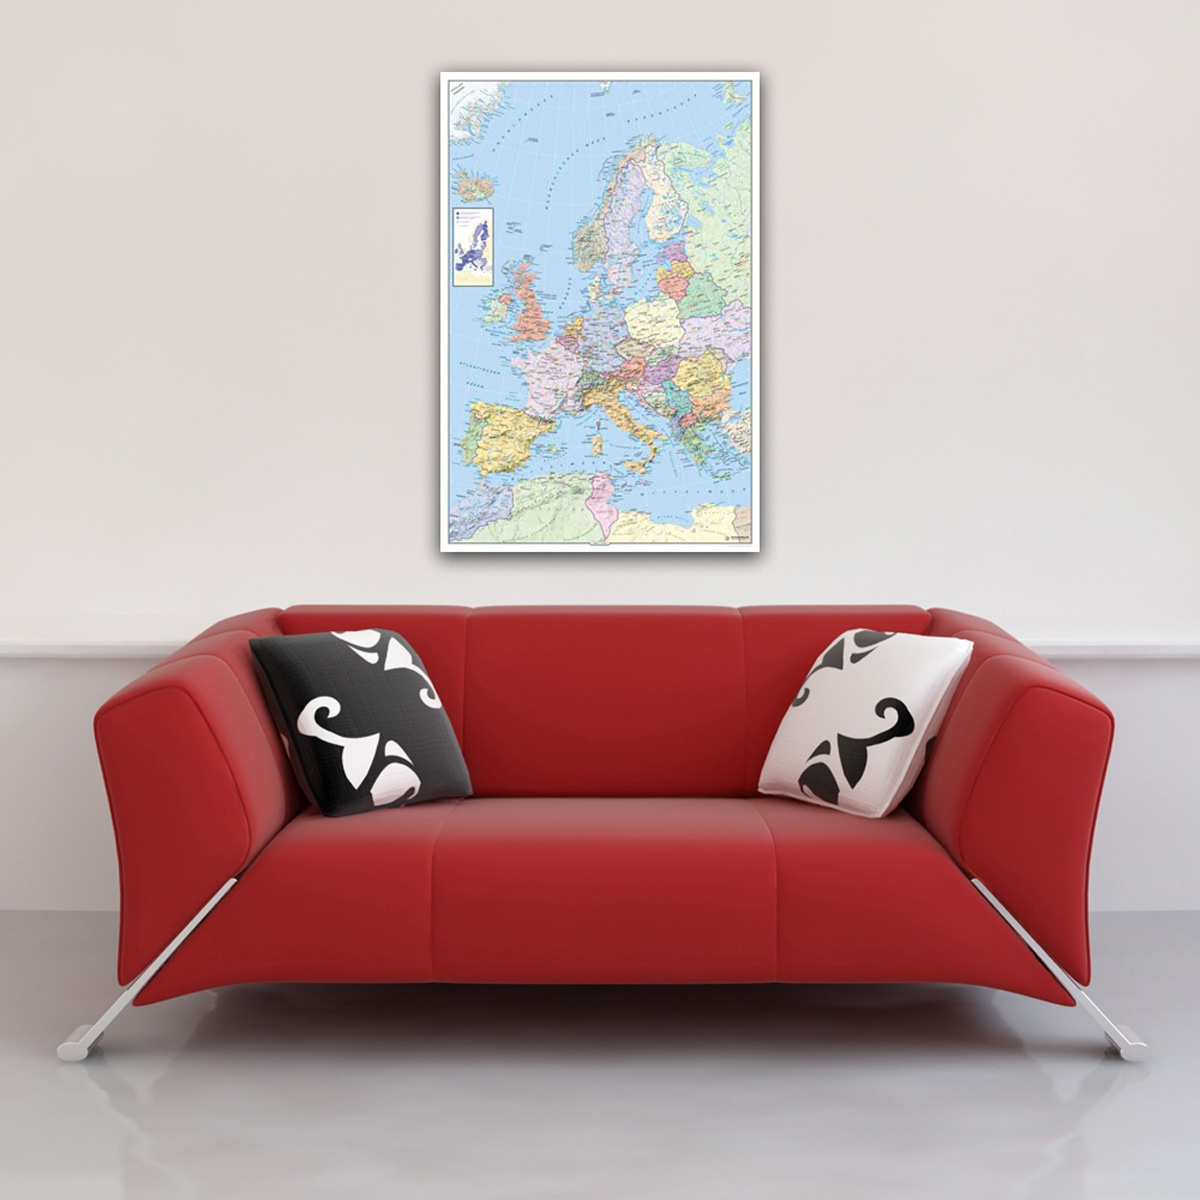 Politische Europakarte - Landkarten